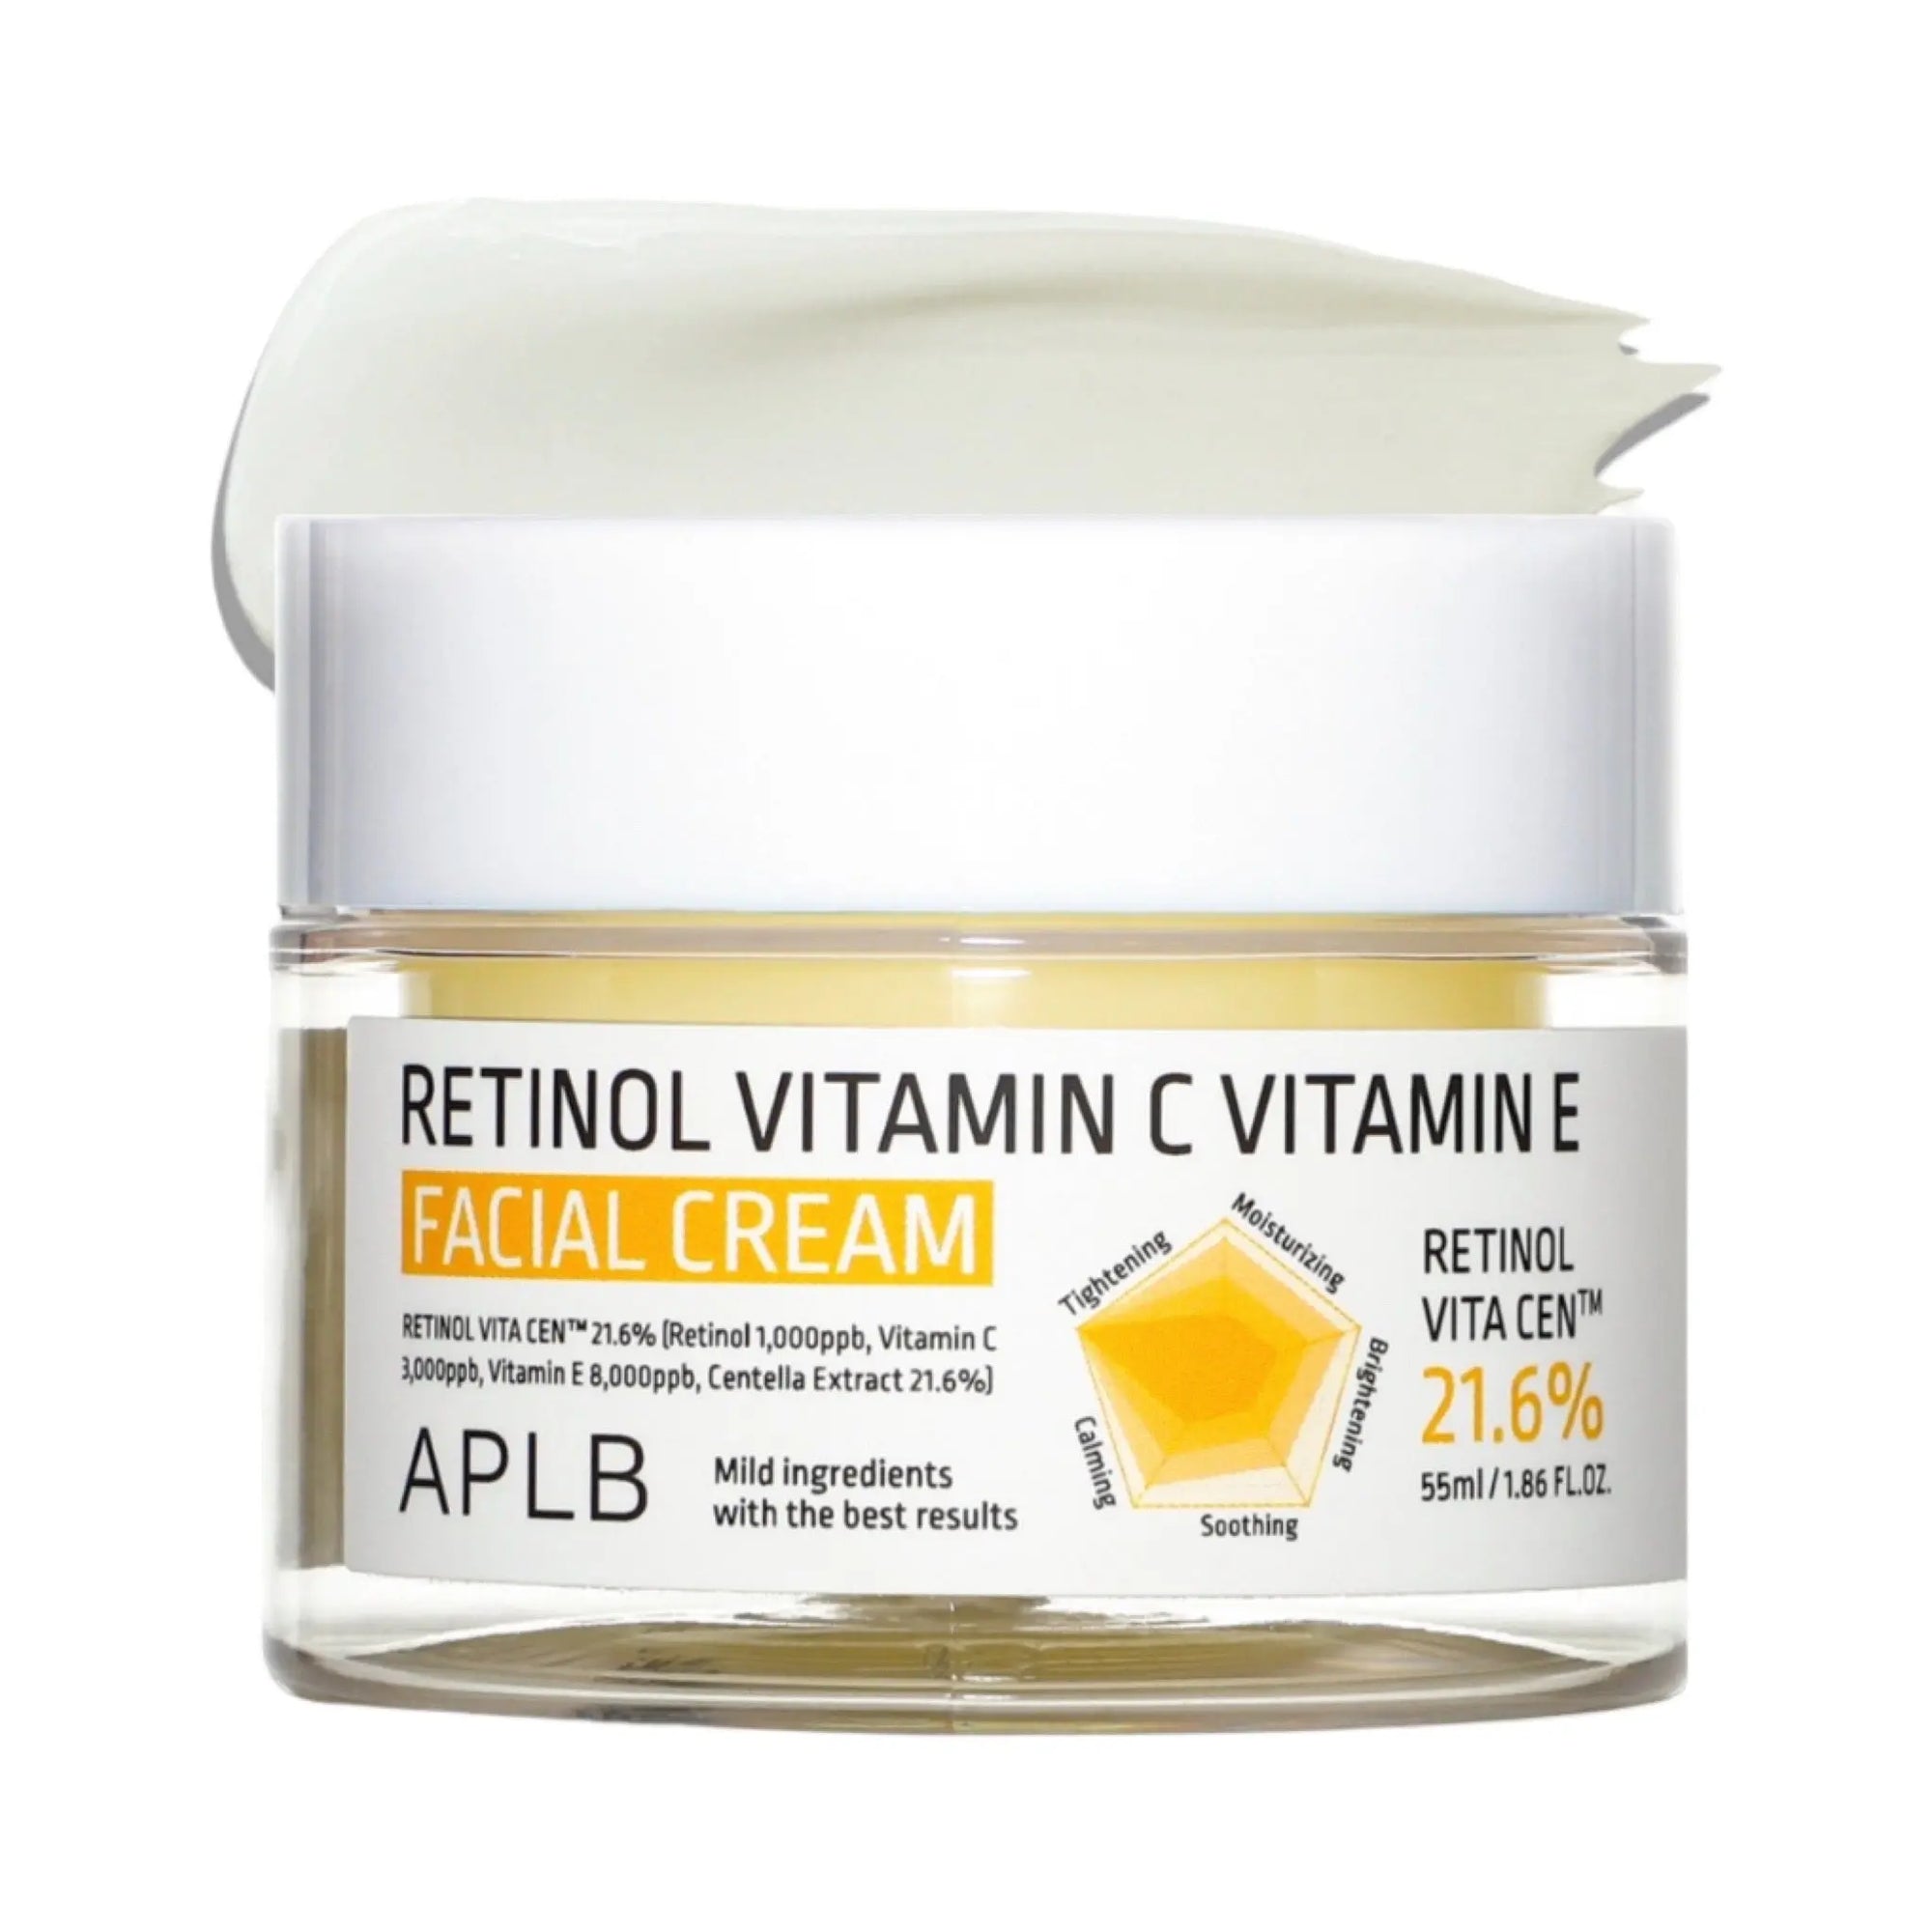 APLB - Retinol Vitamin C Vitamin E Facial Cream 55mL APLB